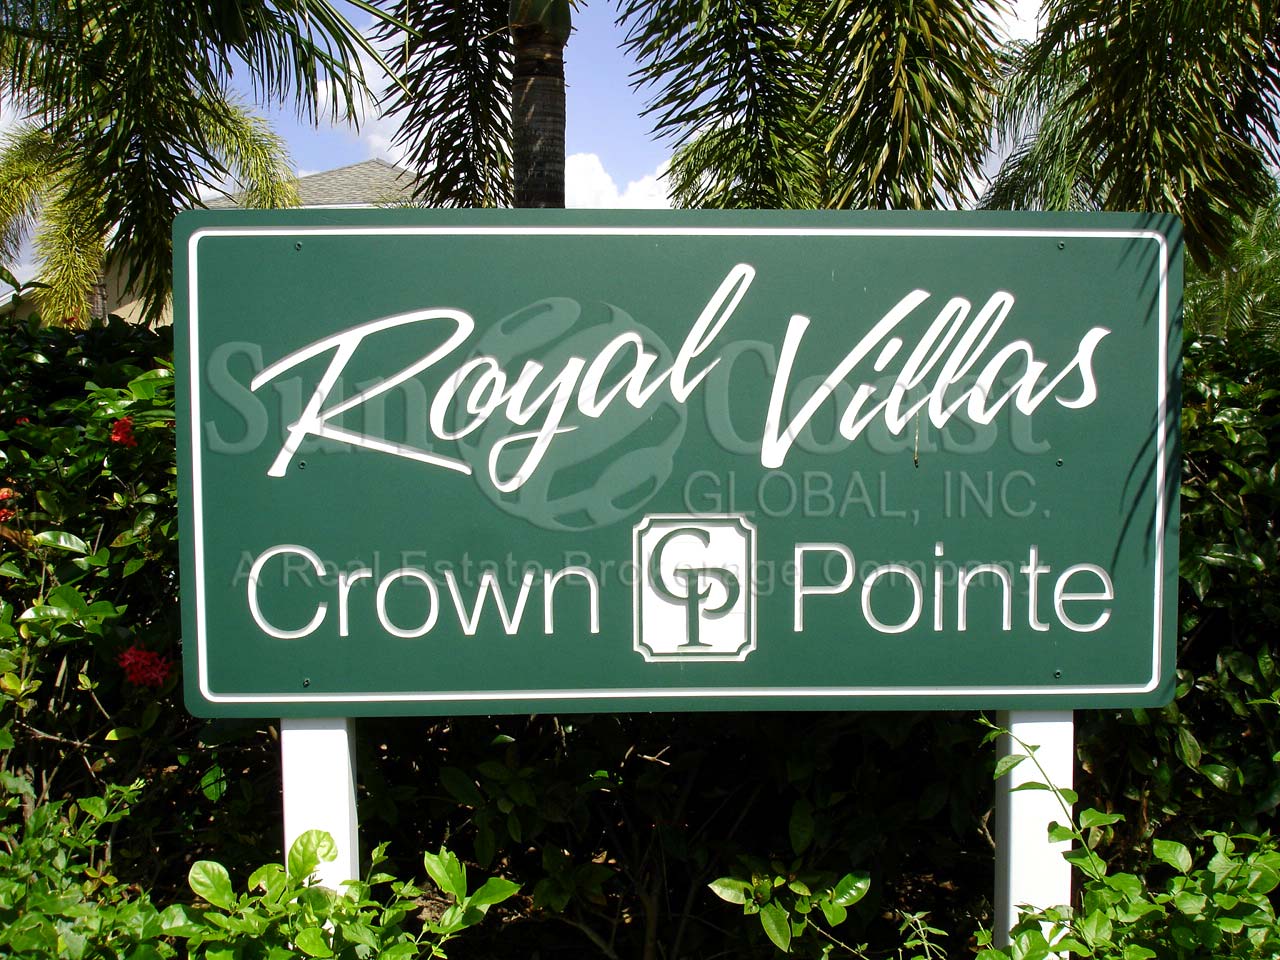 Royal Villas Signage